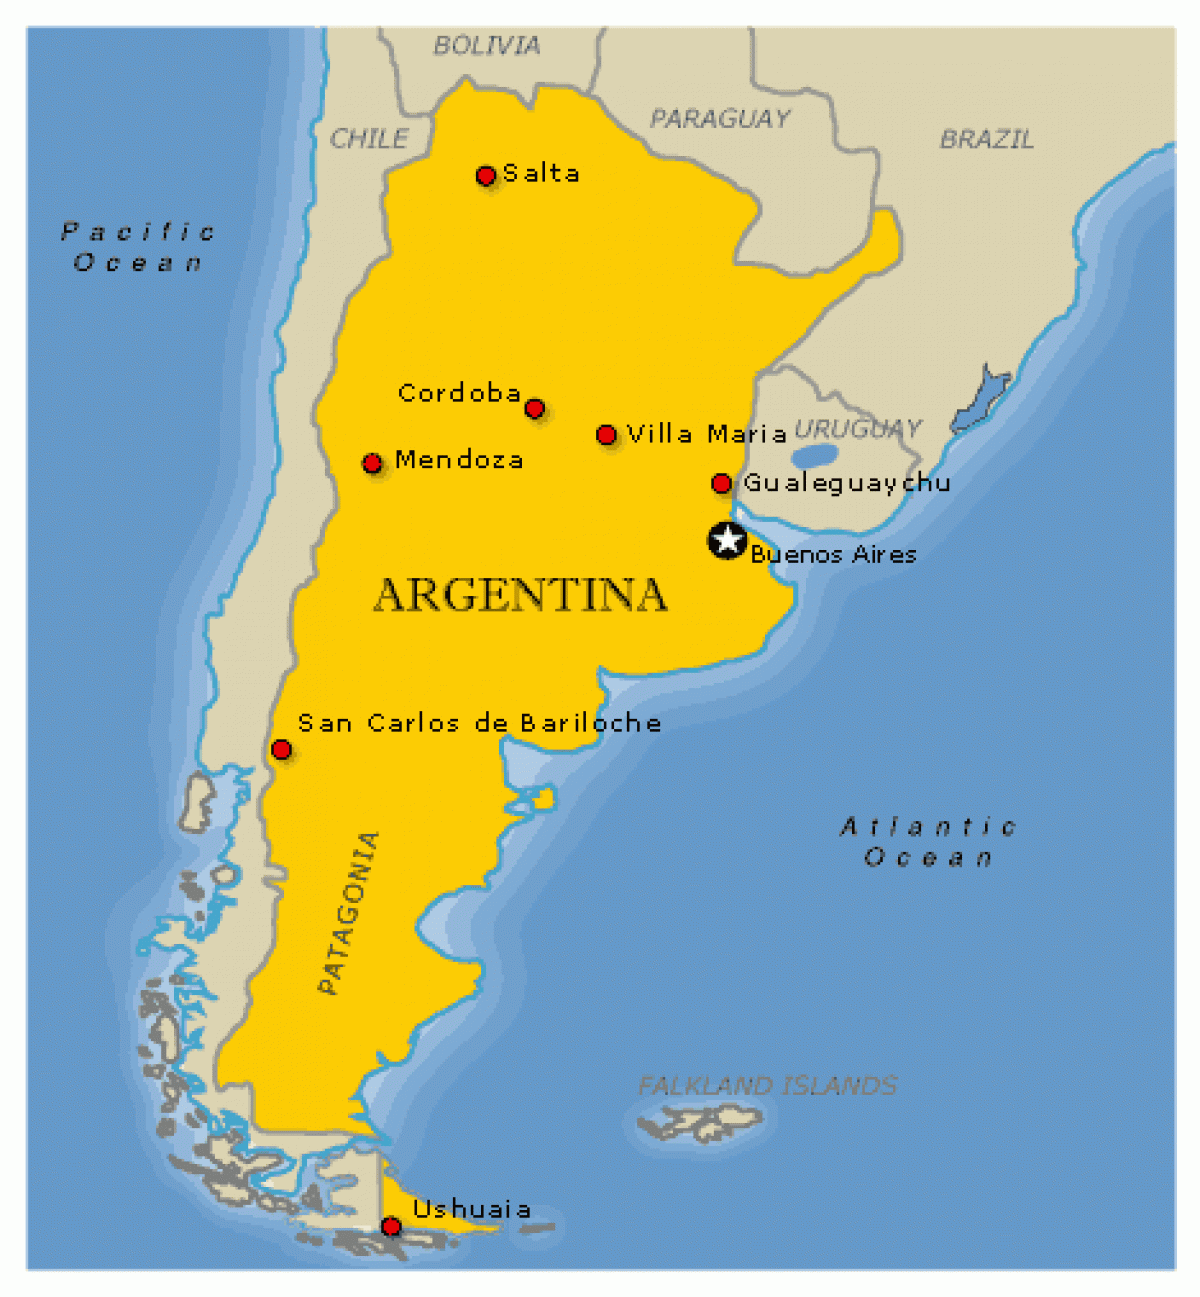 Аргентина страна географическое положение. Расположение Аргентины на карте. Где находится Страна Аргентина на карте. Где находится Страна Аргентина на карте Южной Америки.